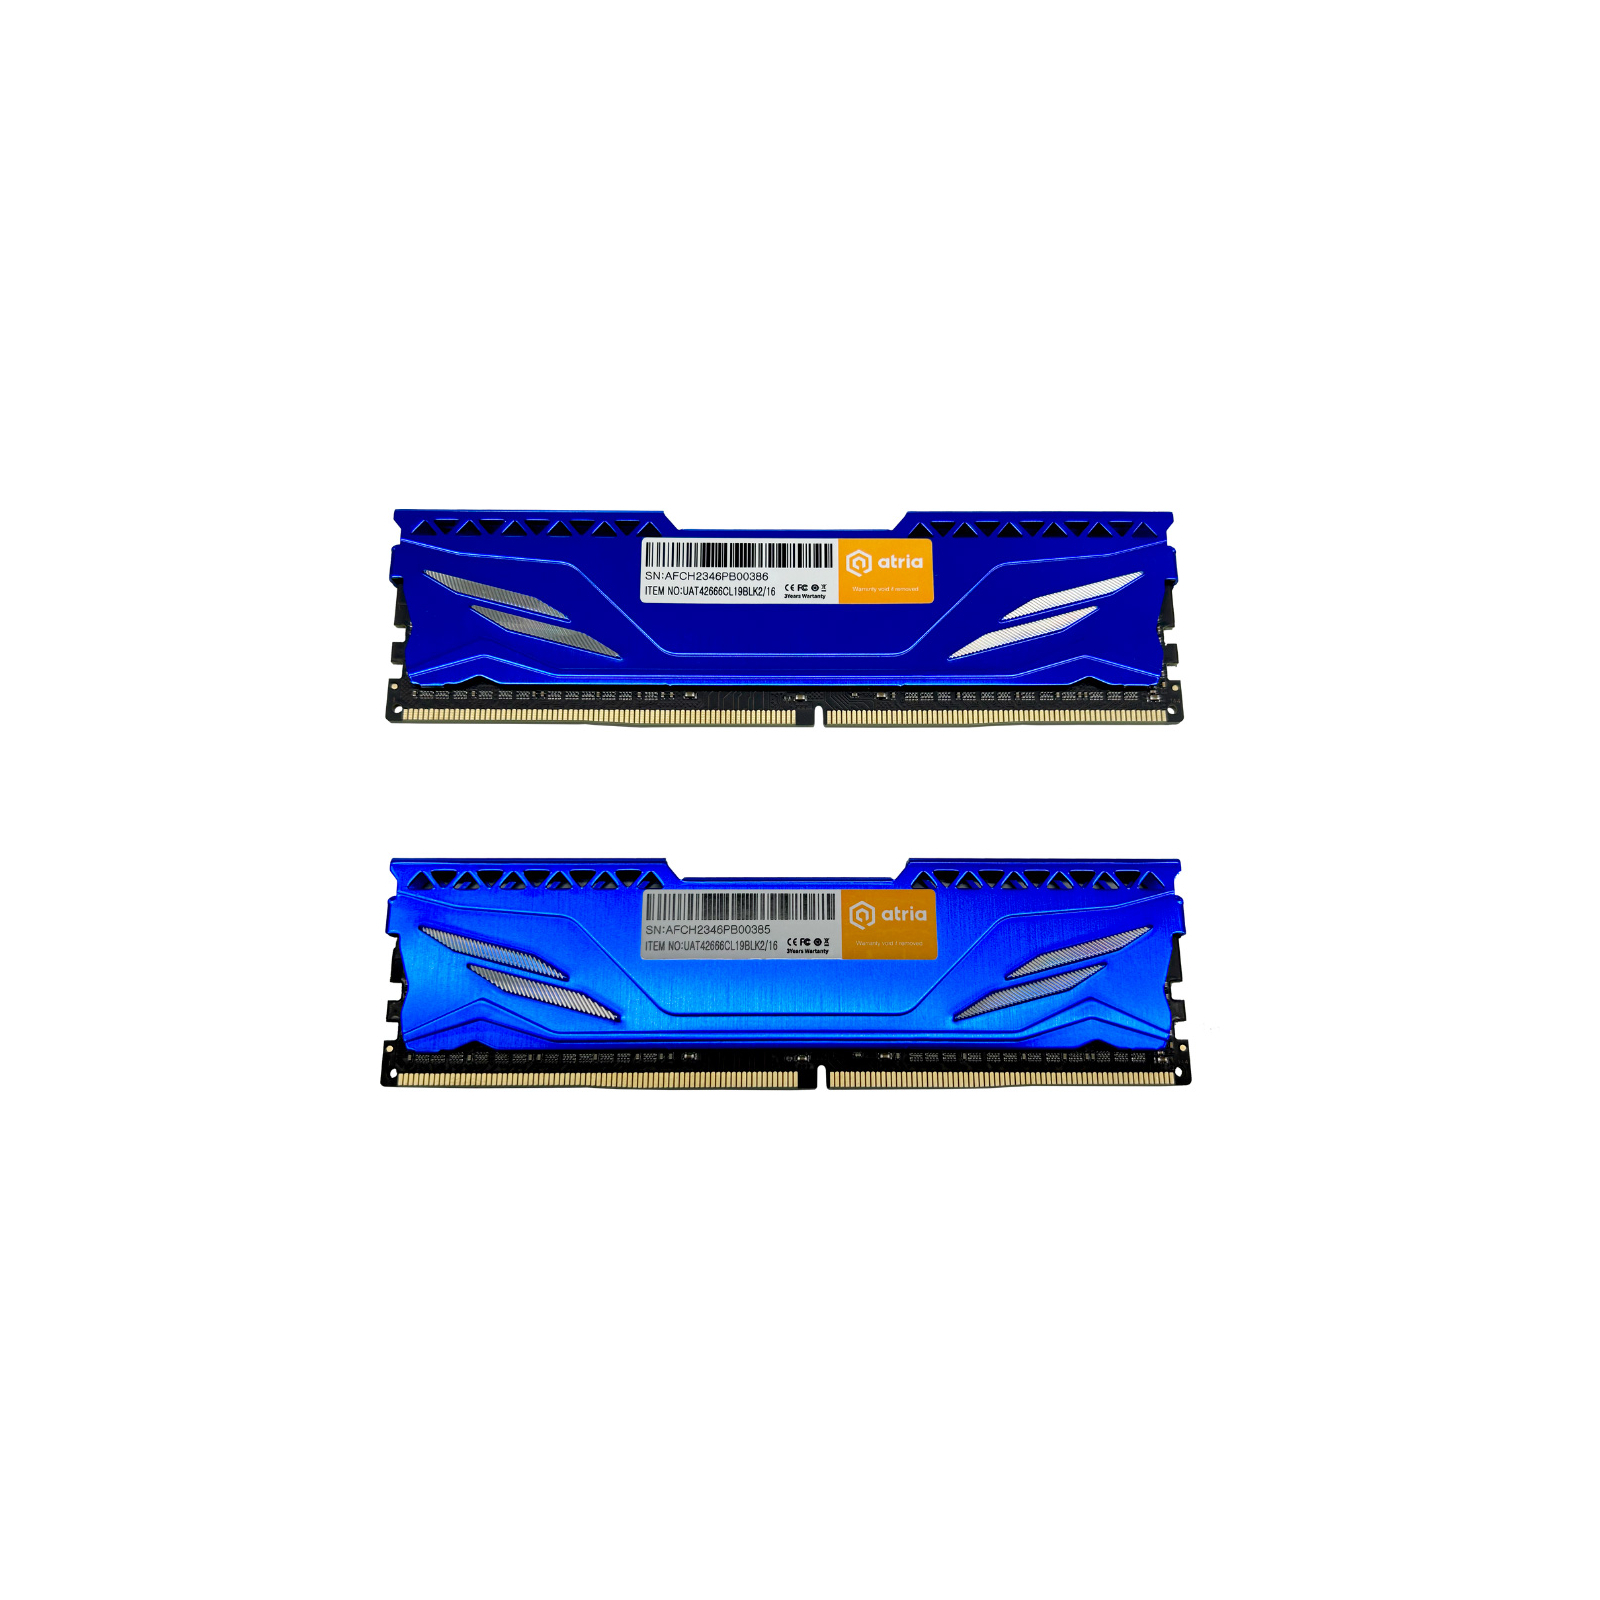 Модуль памяти для компьютера DDR4 32GB (2x16GB) 2666 MHz Fly Blue ATRIA (UAT42666CL19BLK2/32) изображение 2